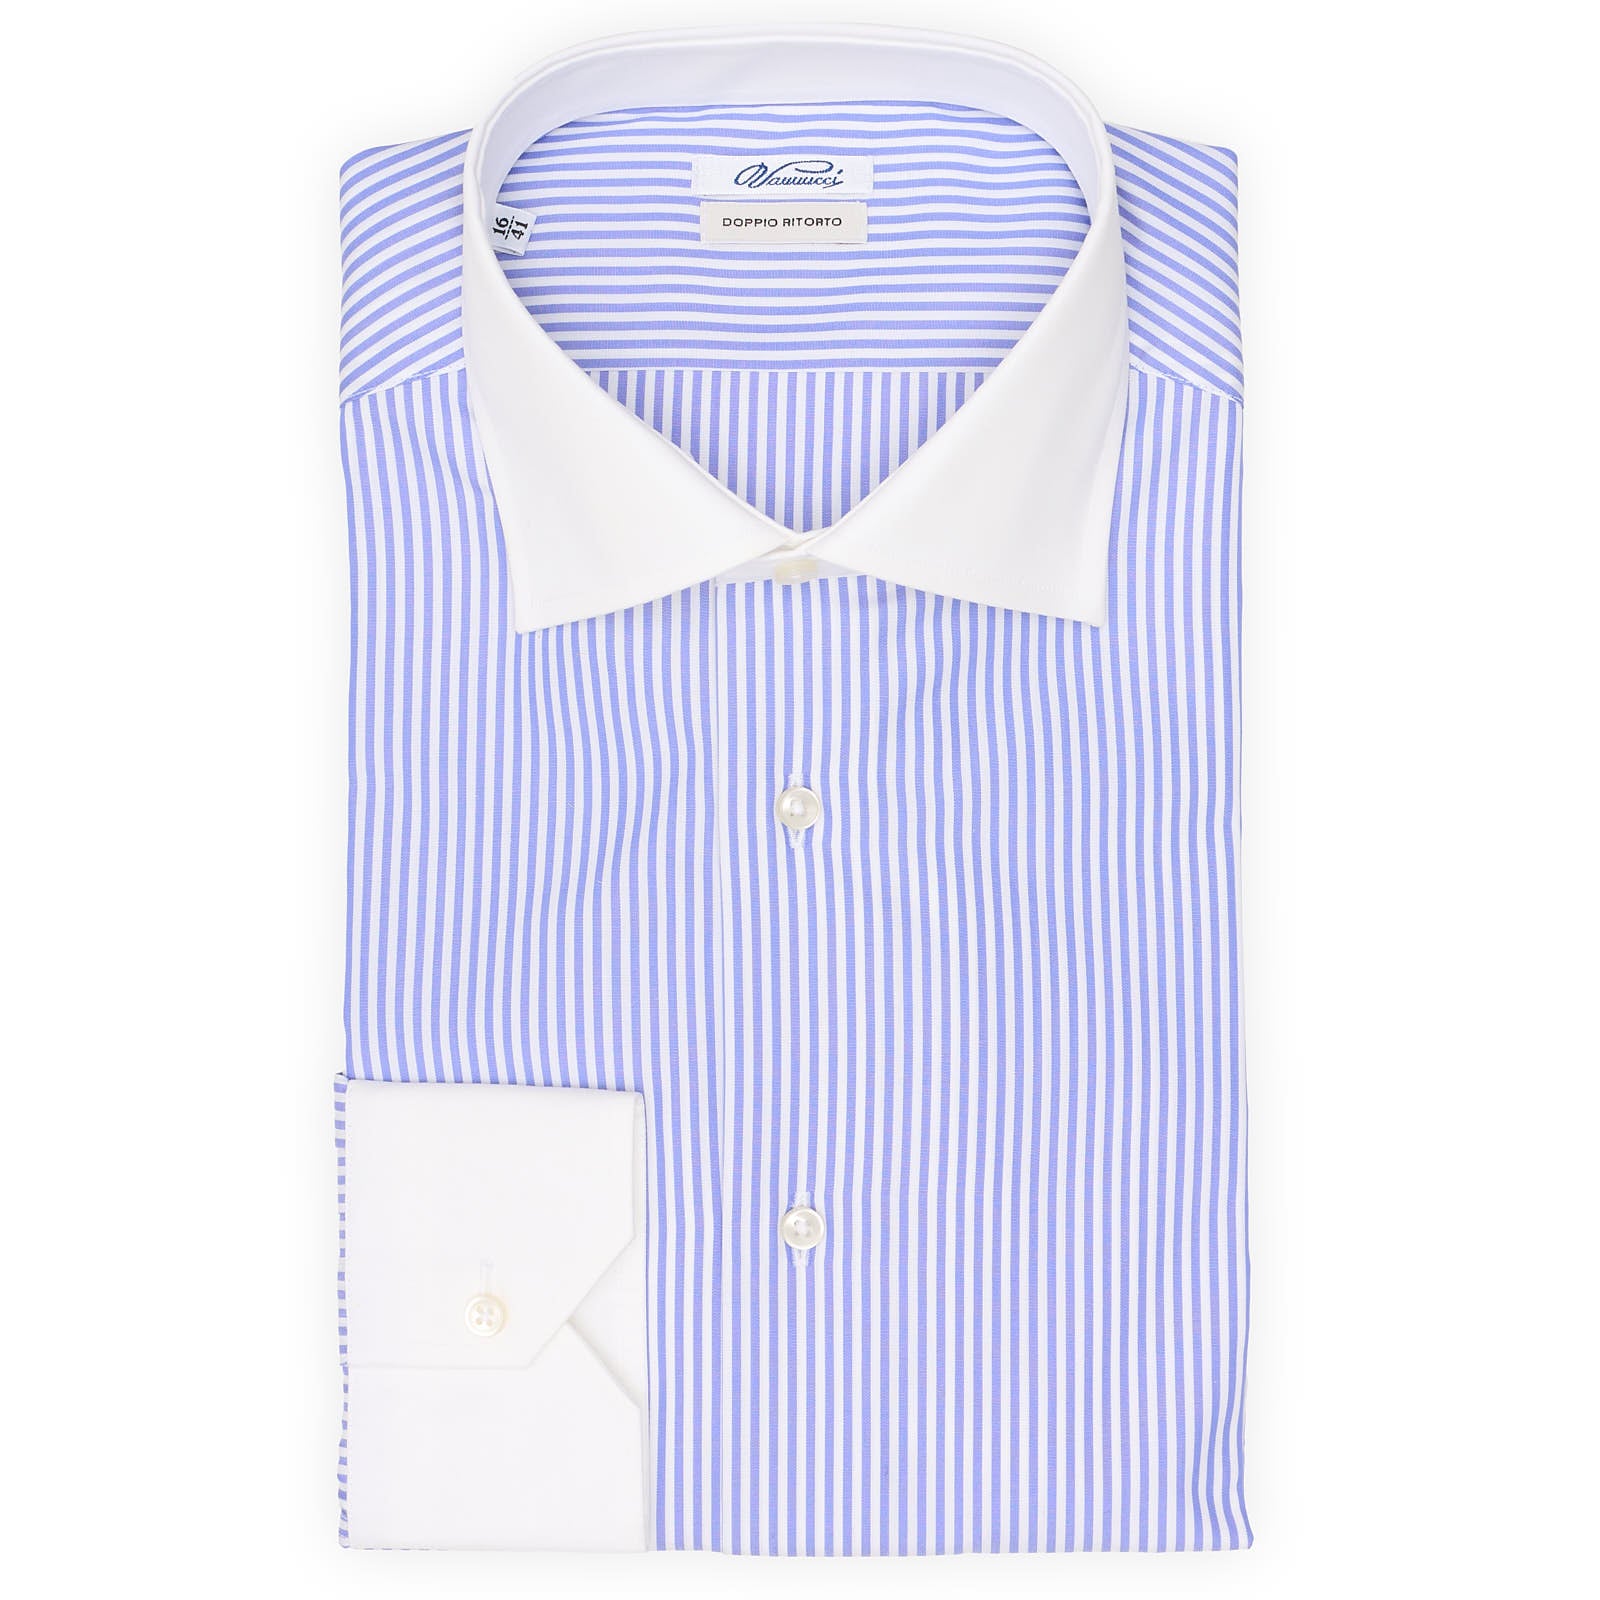 VANNUCCI Milano Blue Bengal Striped Cotton Dress Shirt EU 41 NEW US 16